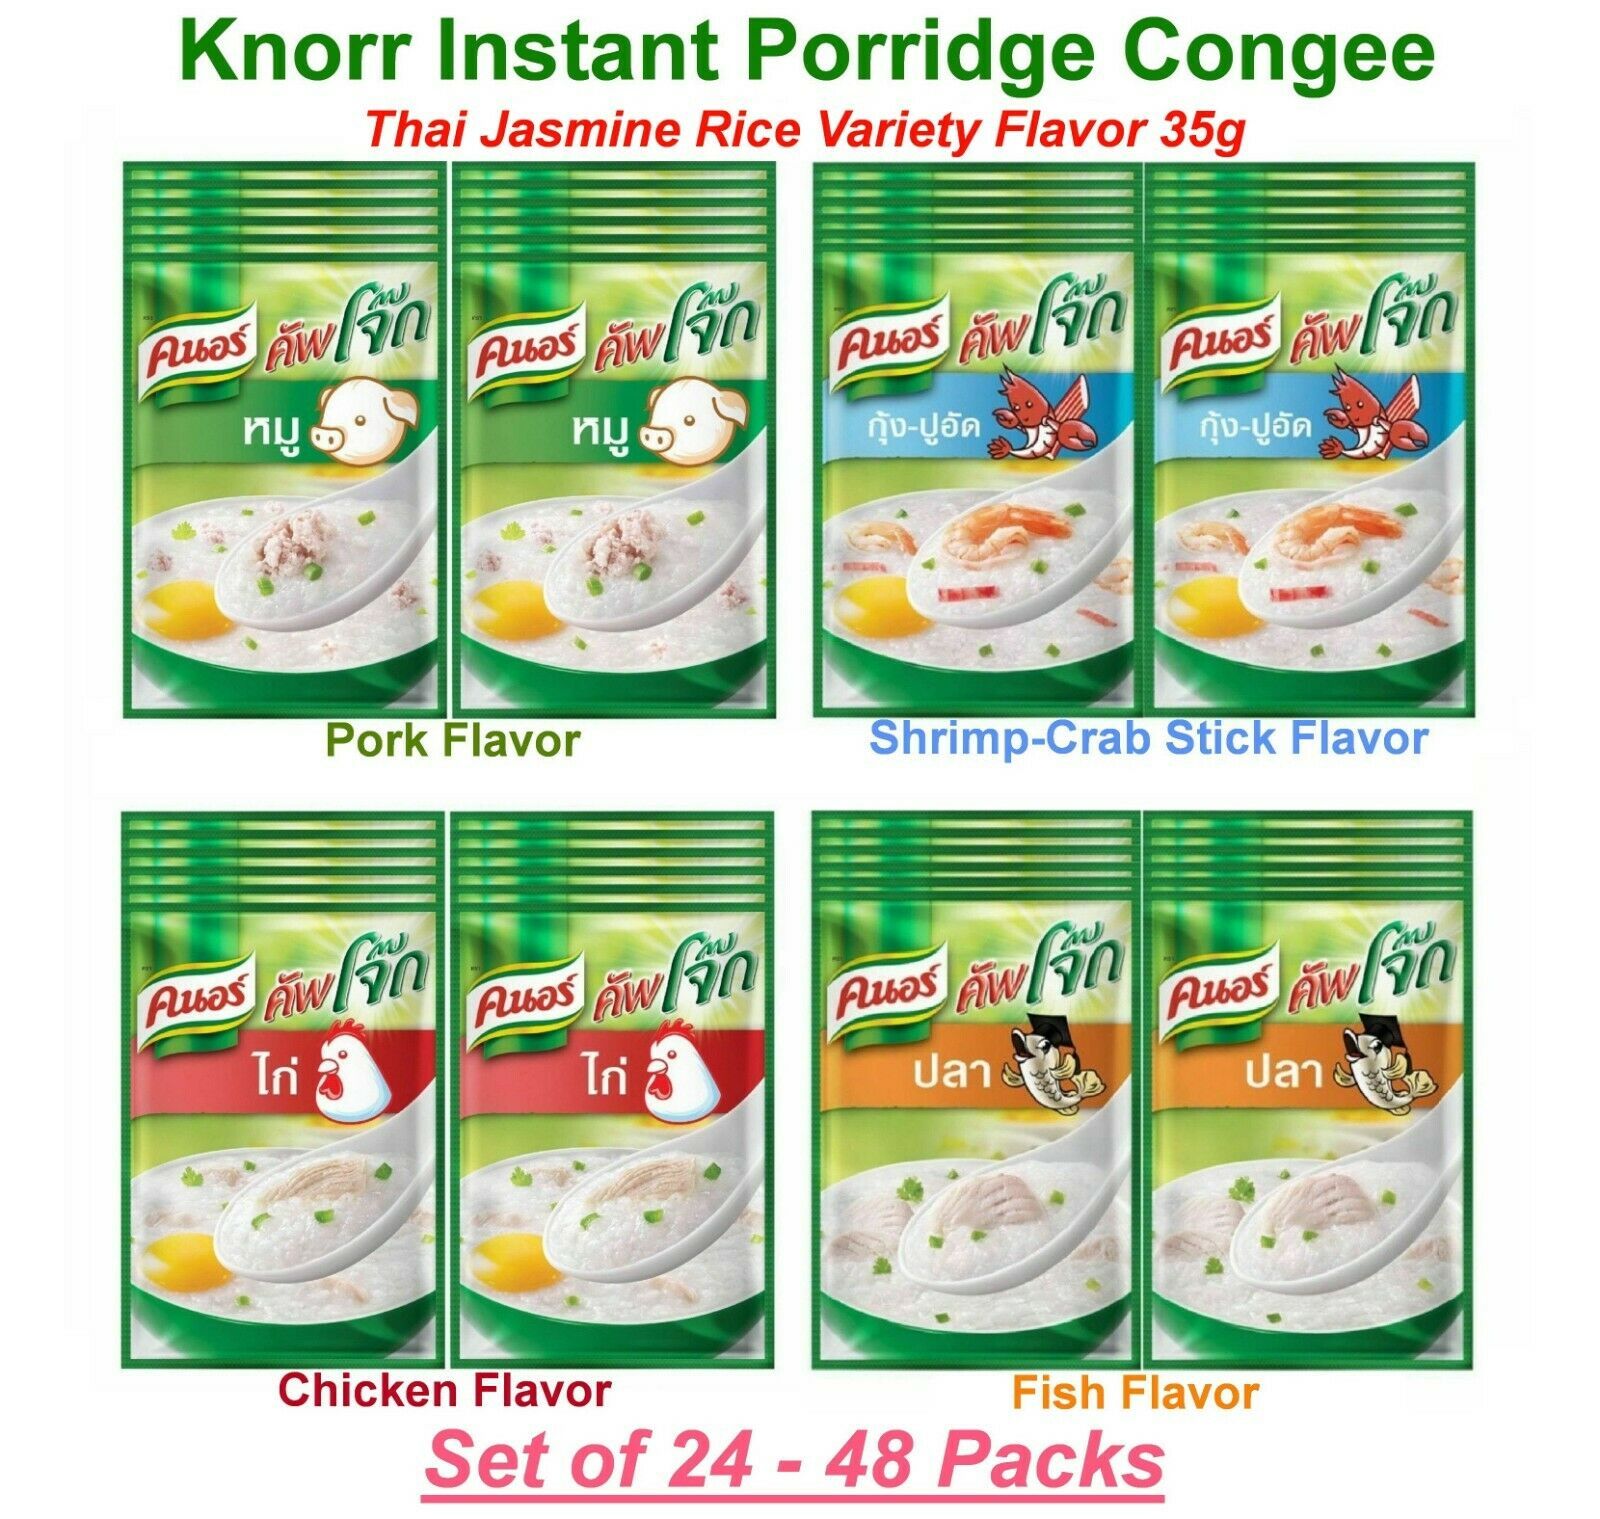 Knorr Instant Porridge Congee Thai Jasmine Rice Delicious Set of 24 - 48 Packs